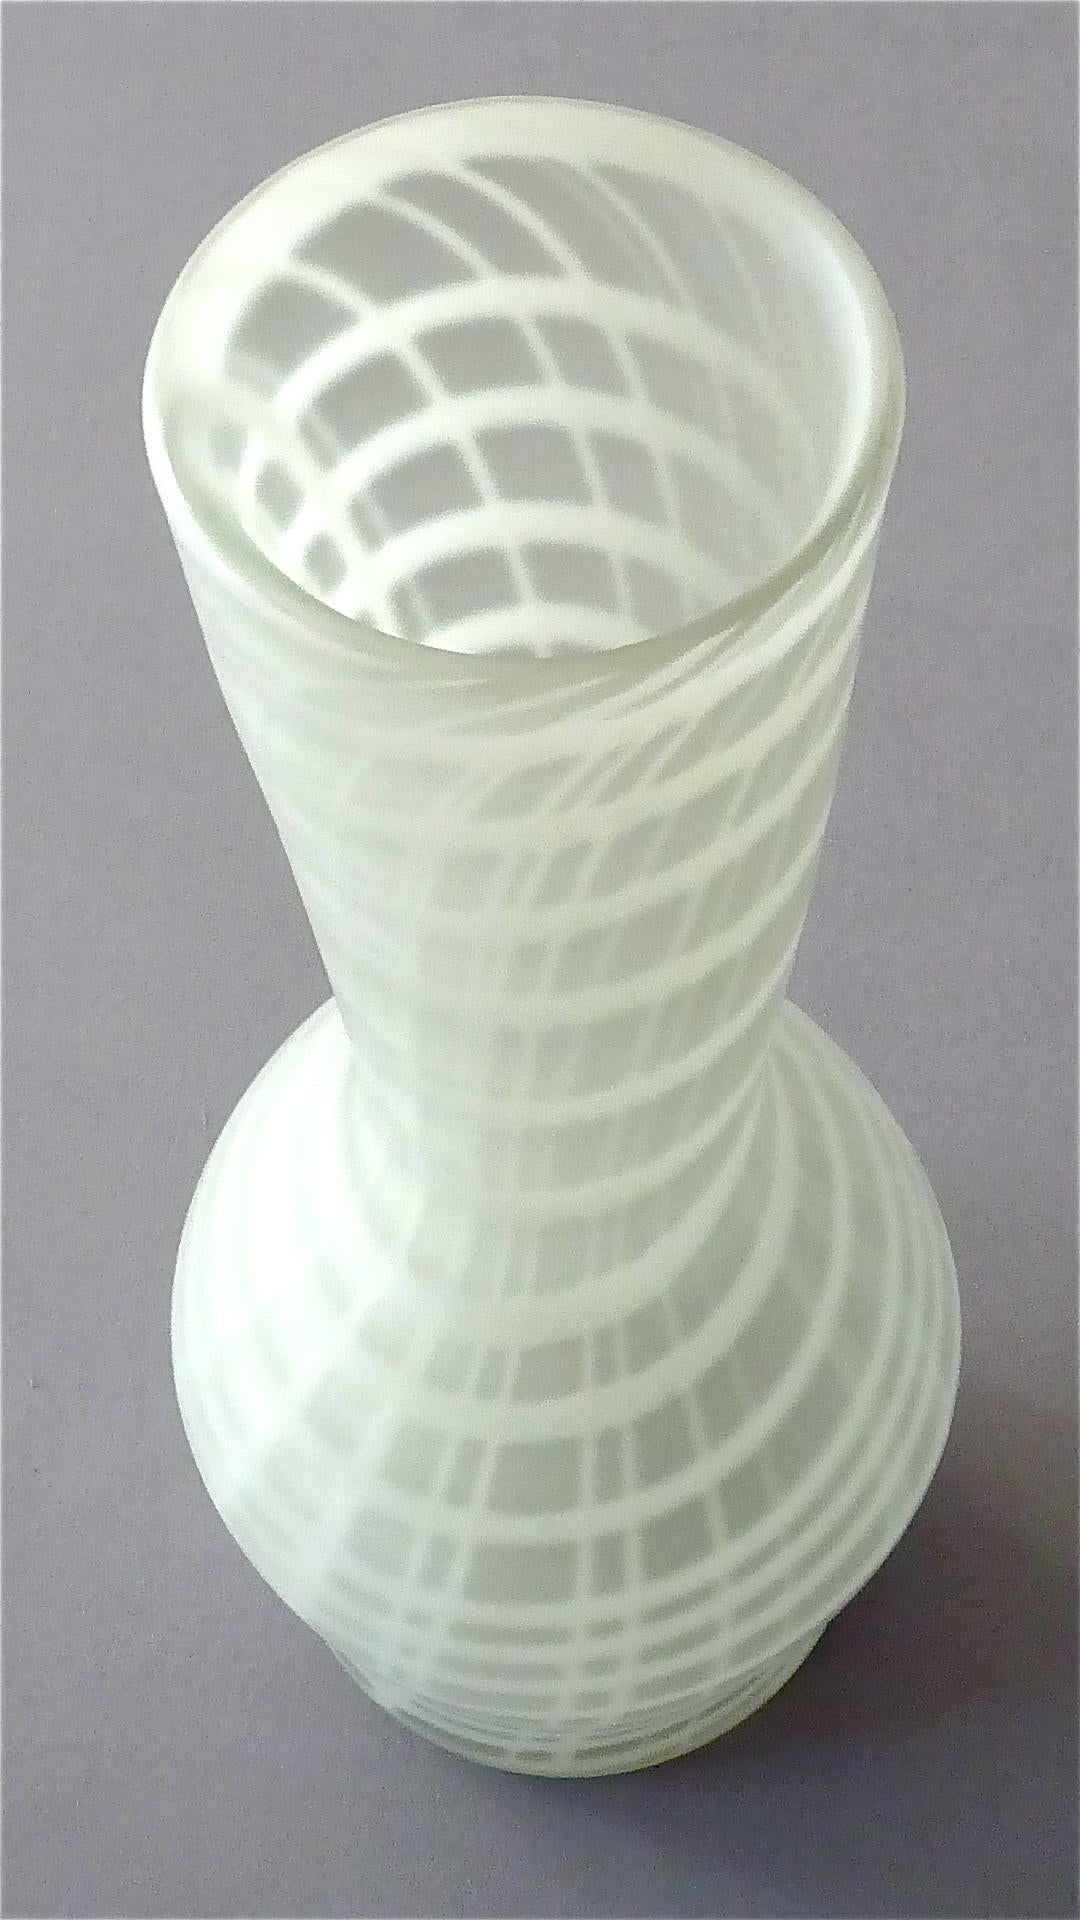 Italian Signed Large Giuliano Tosi Art Glass Vase Satin White Stripes, Italy, 1970s For Sale